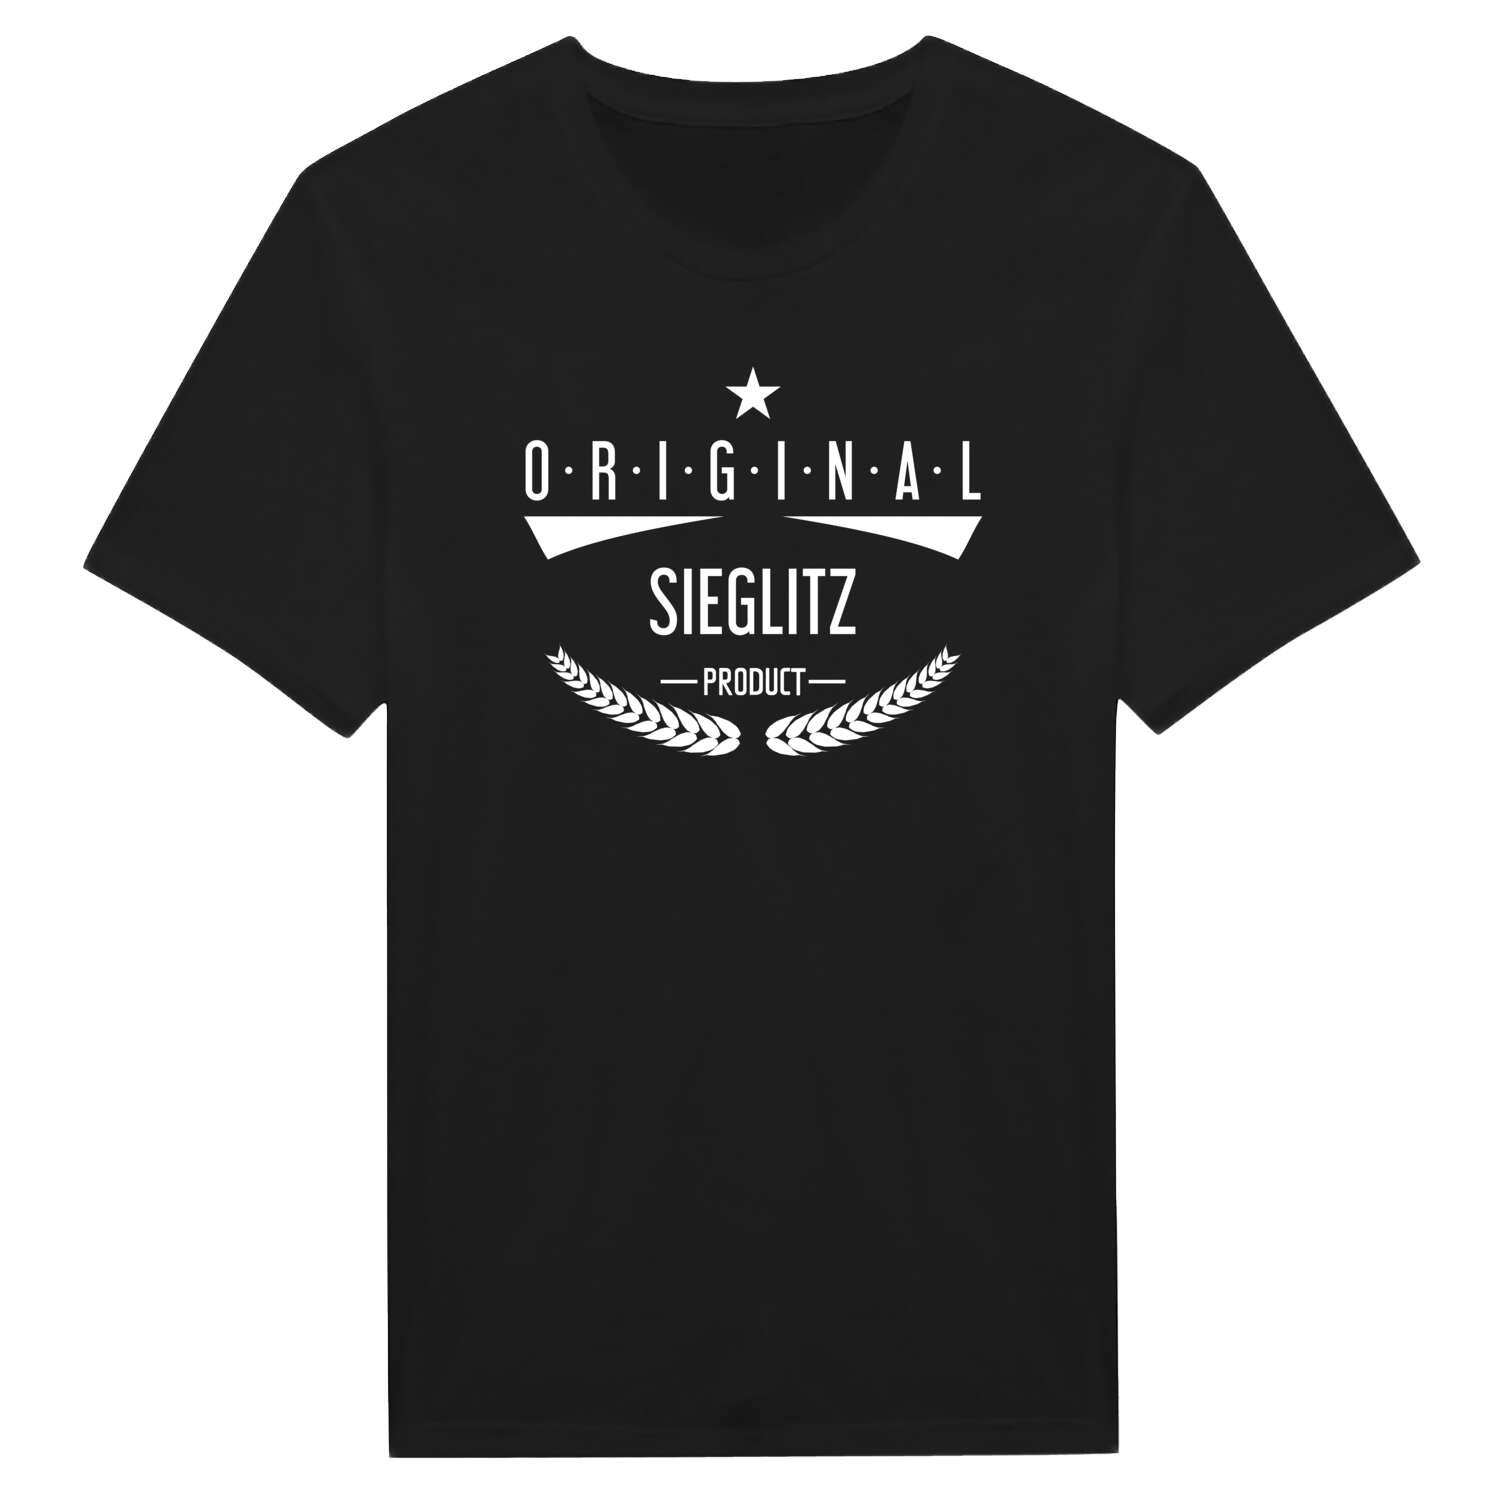 Sieglitz T-Shirt »Original Product«